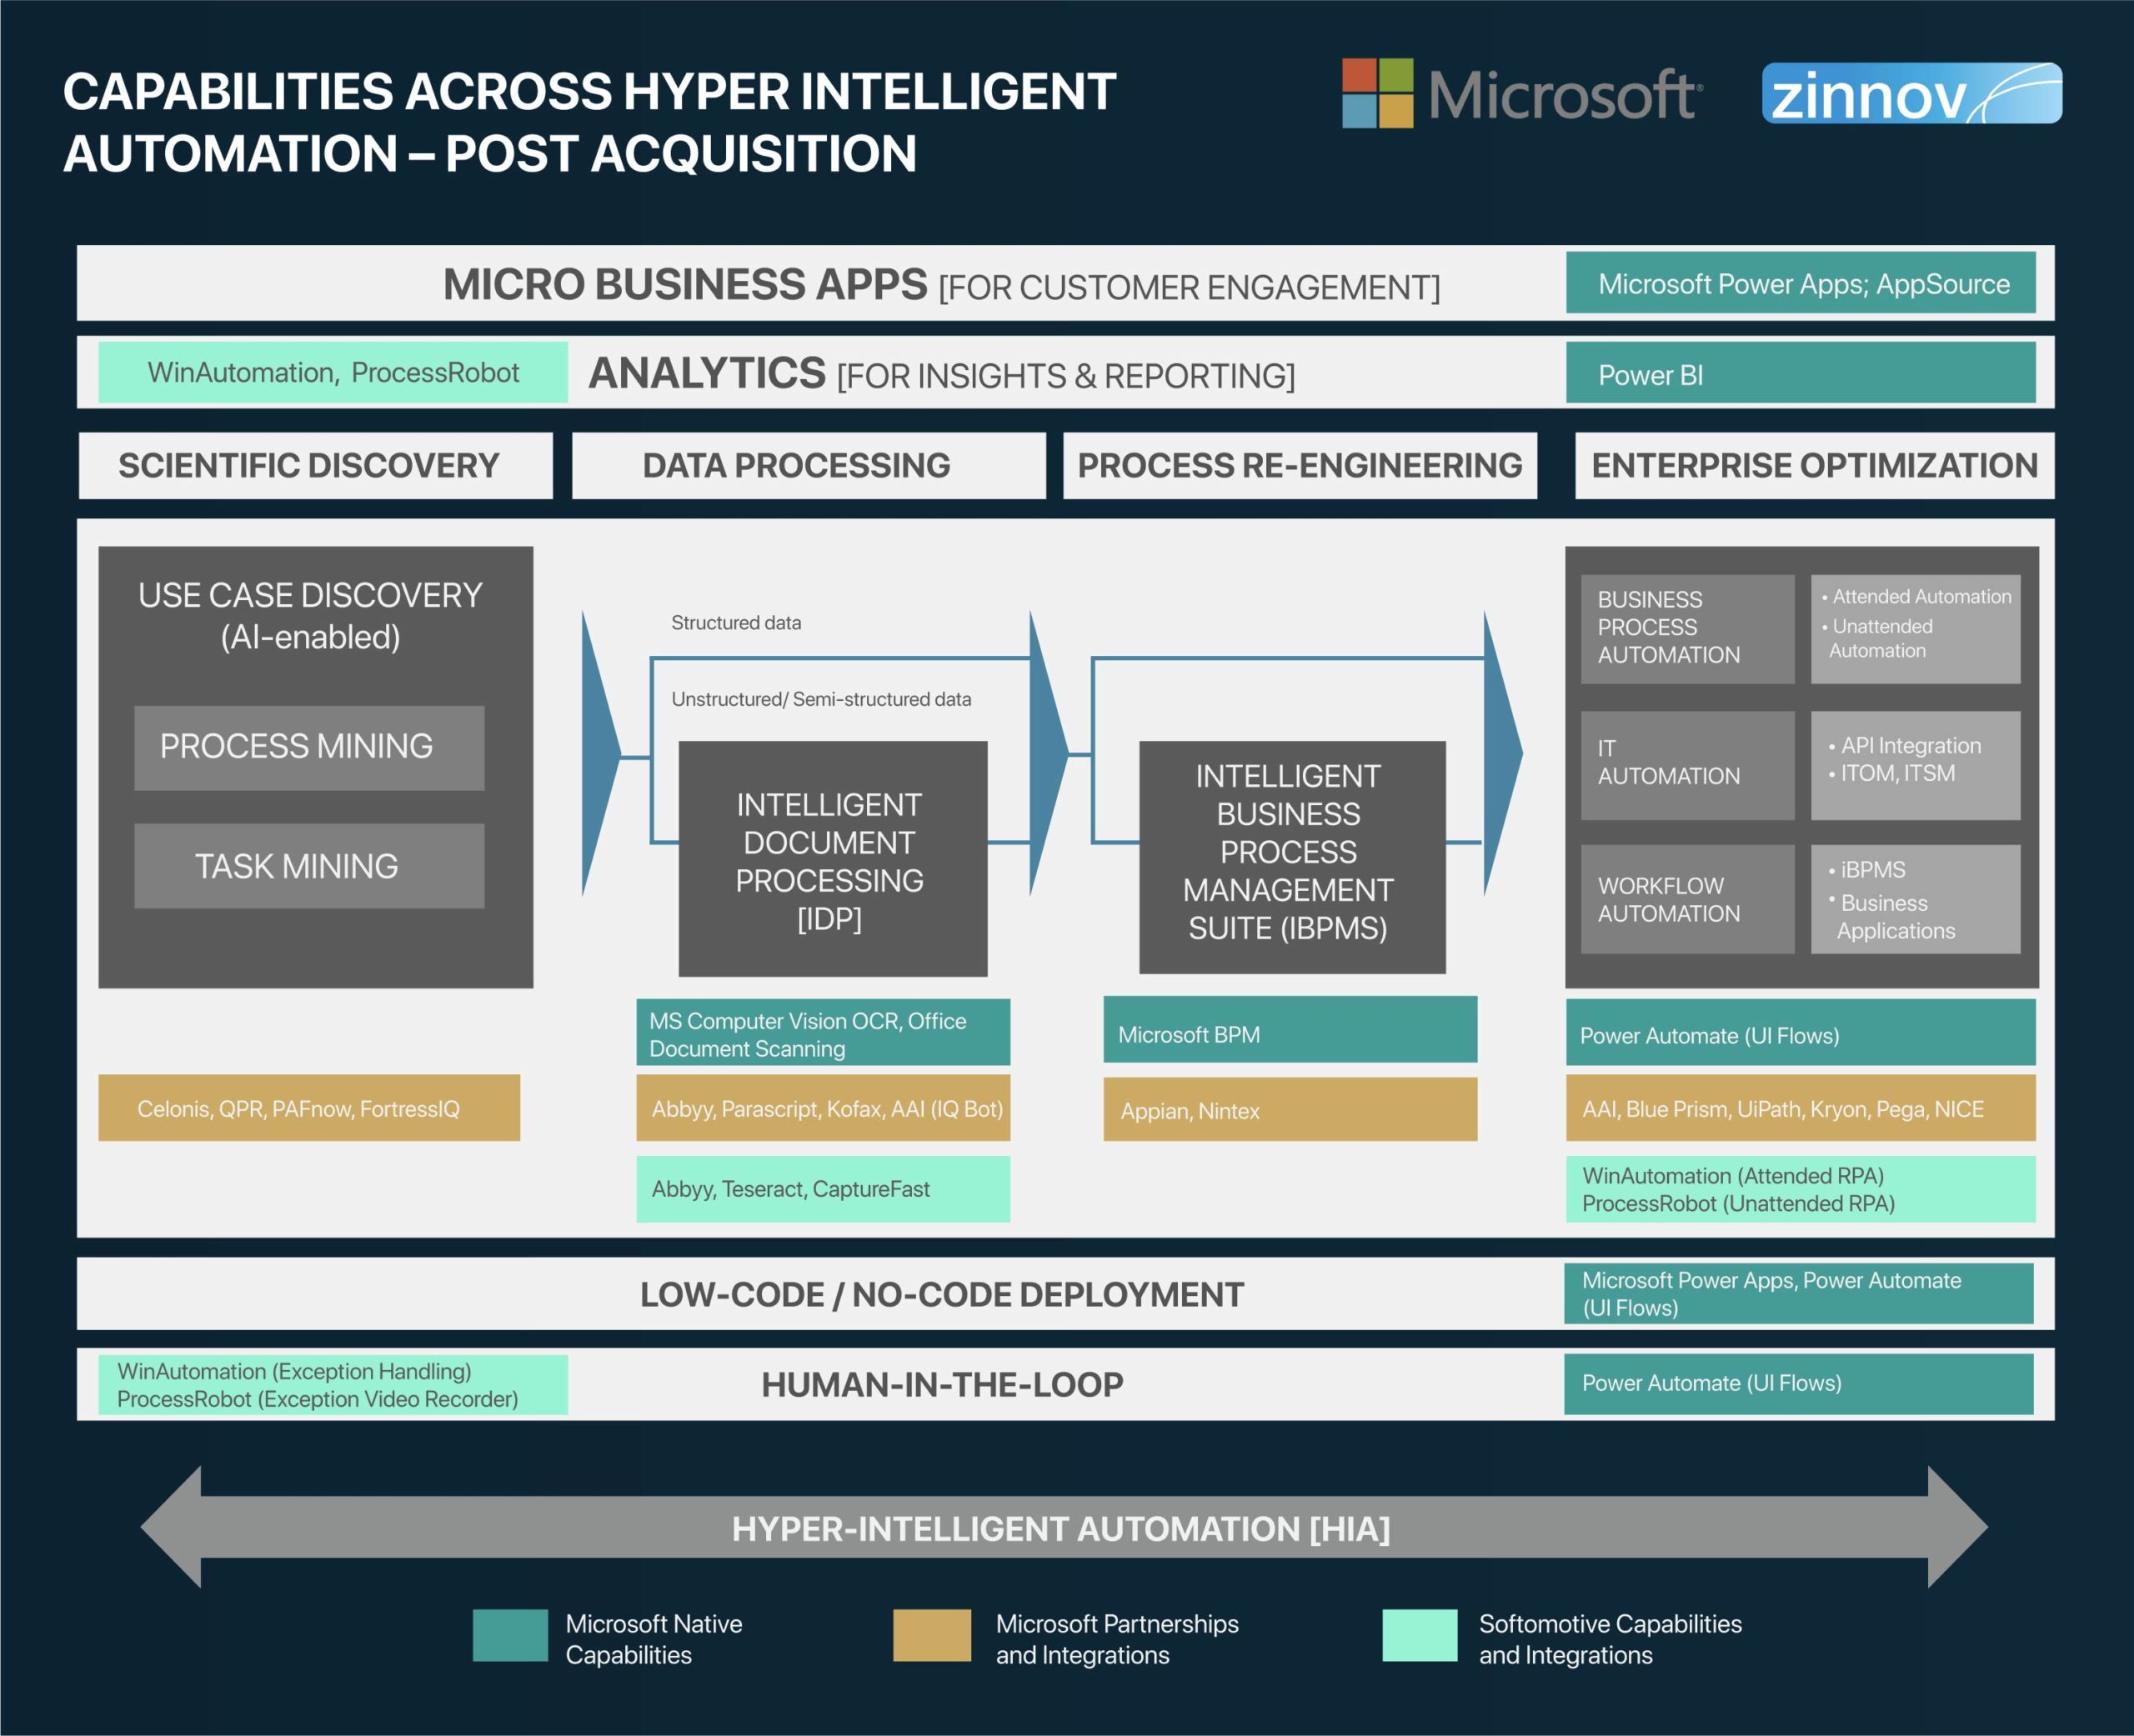 Microsoft's capabilities across the  Hyper Intelligent Automation framework